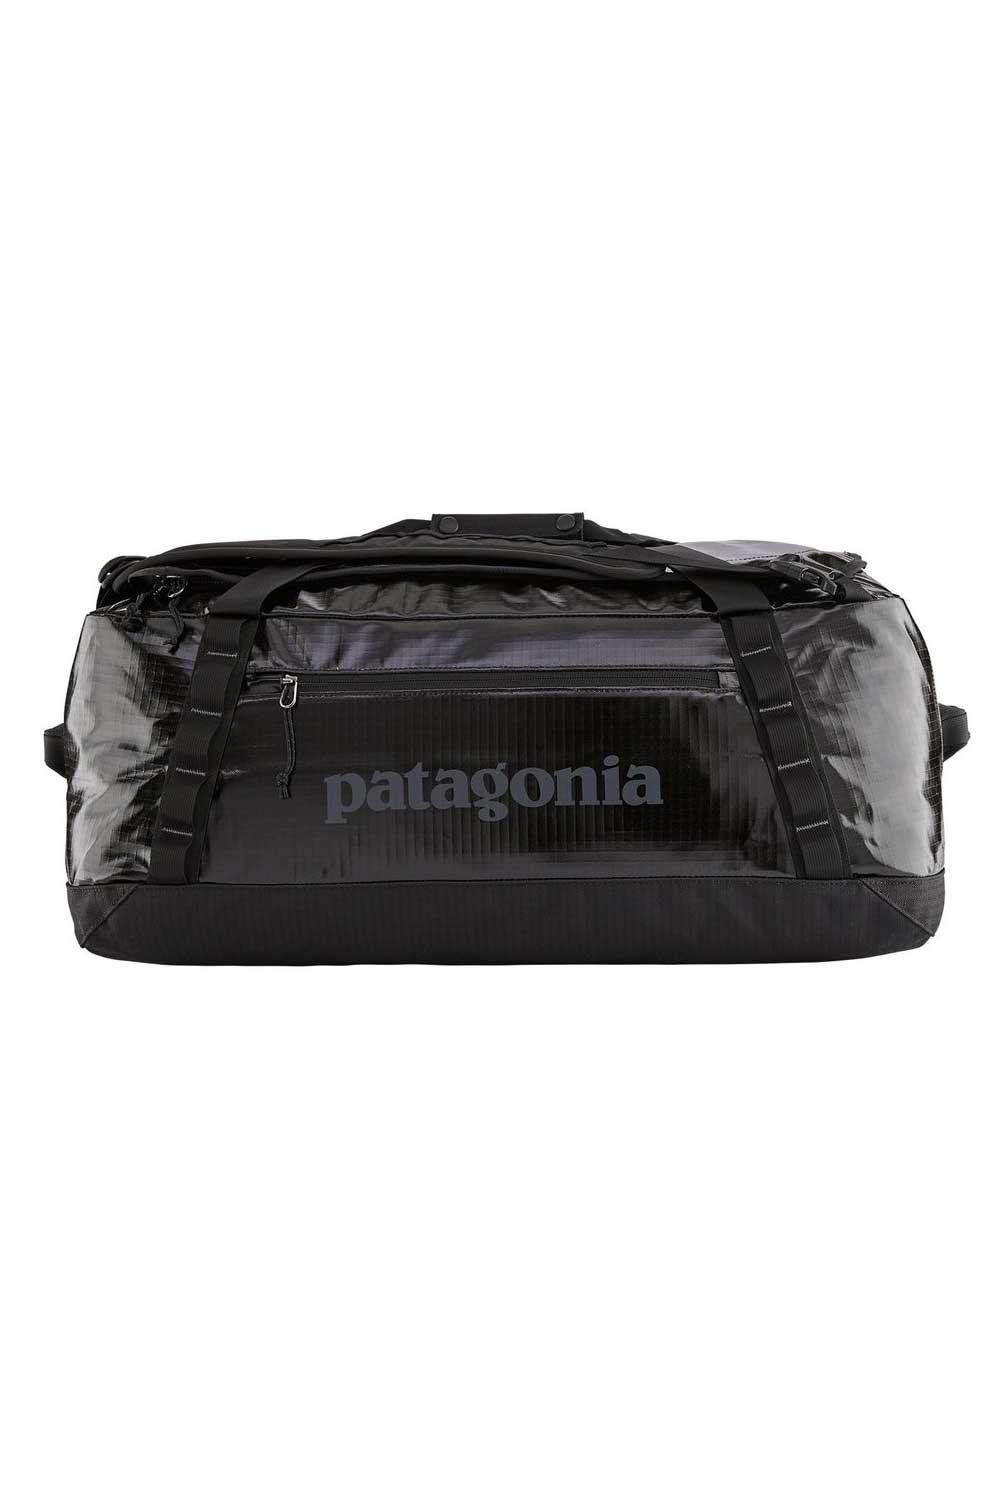 Patagonia Black Hole Black Duffel Bag 55L